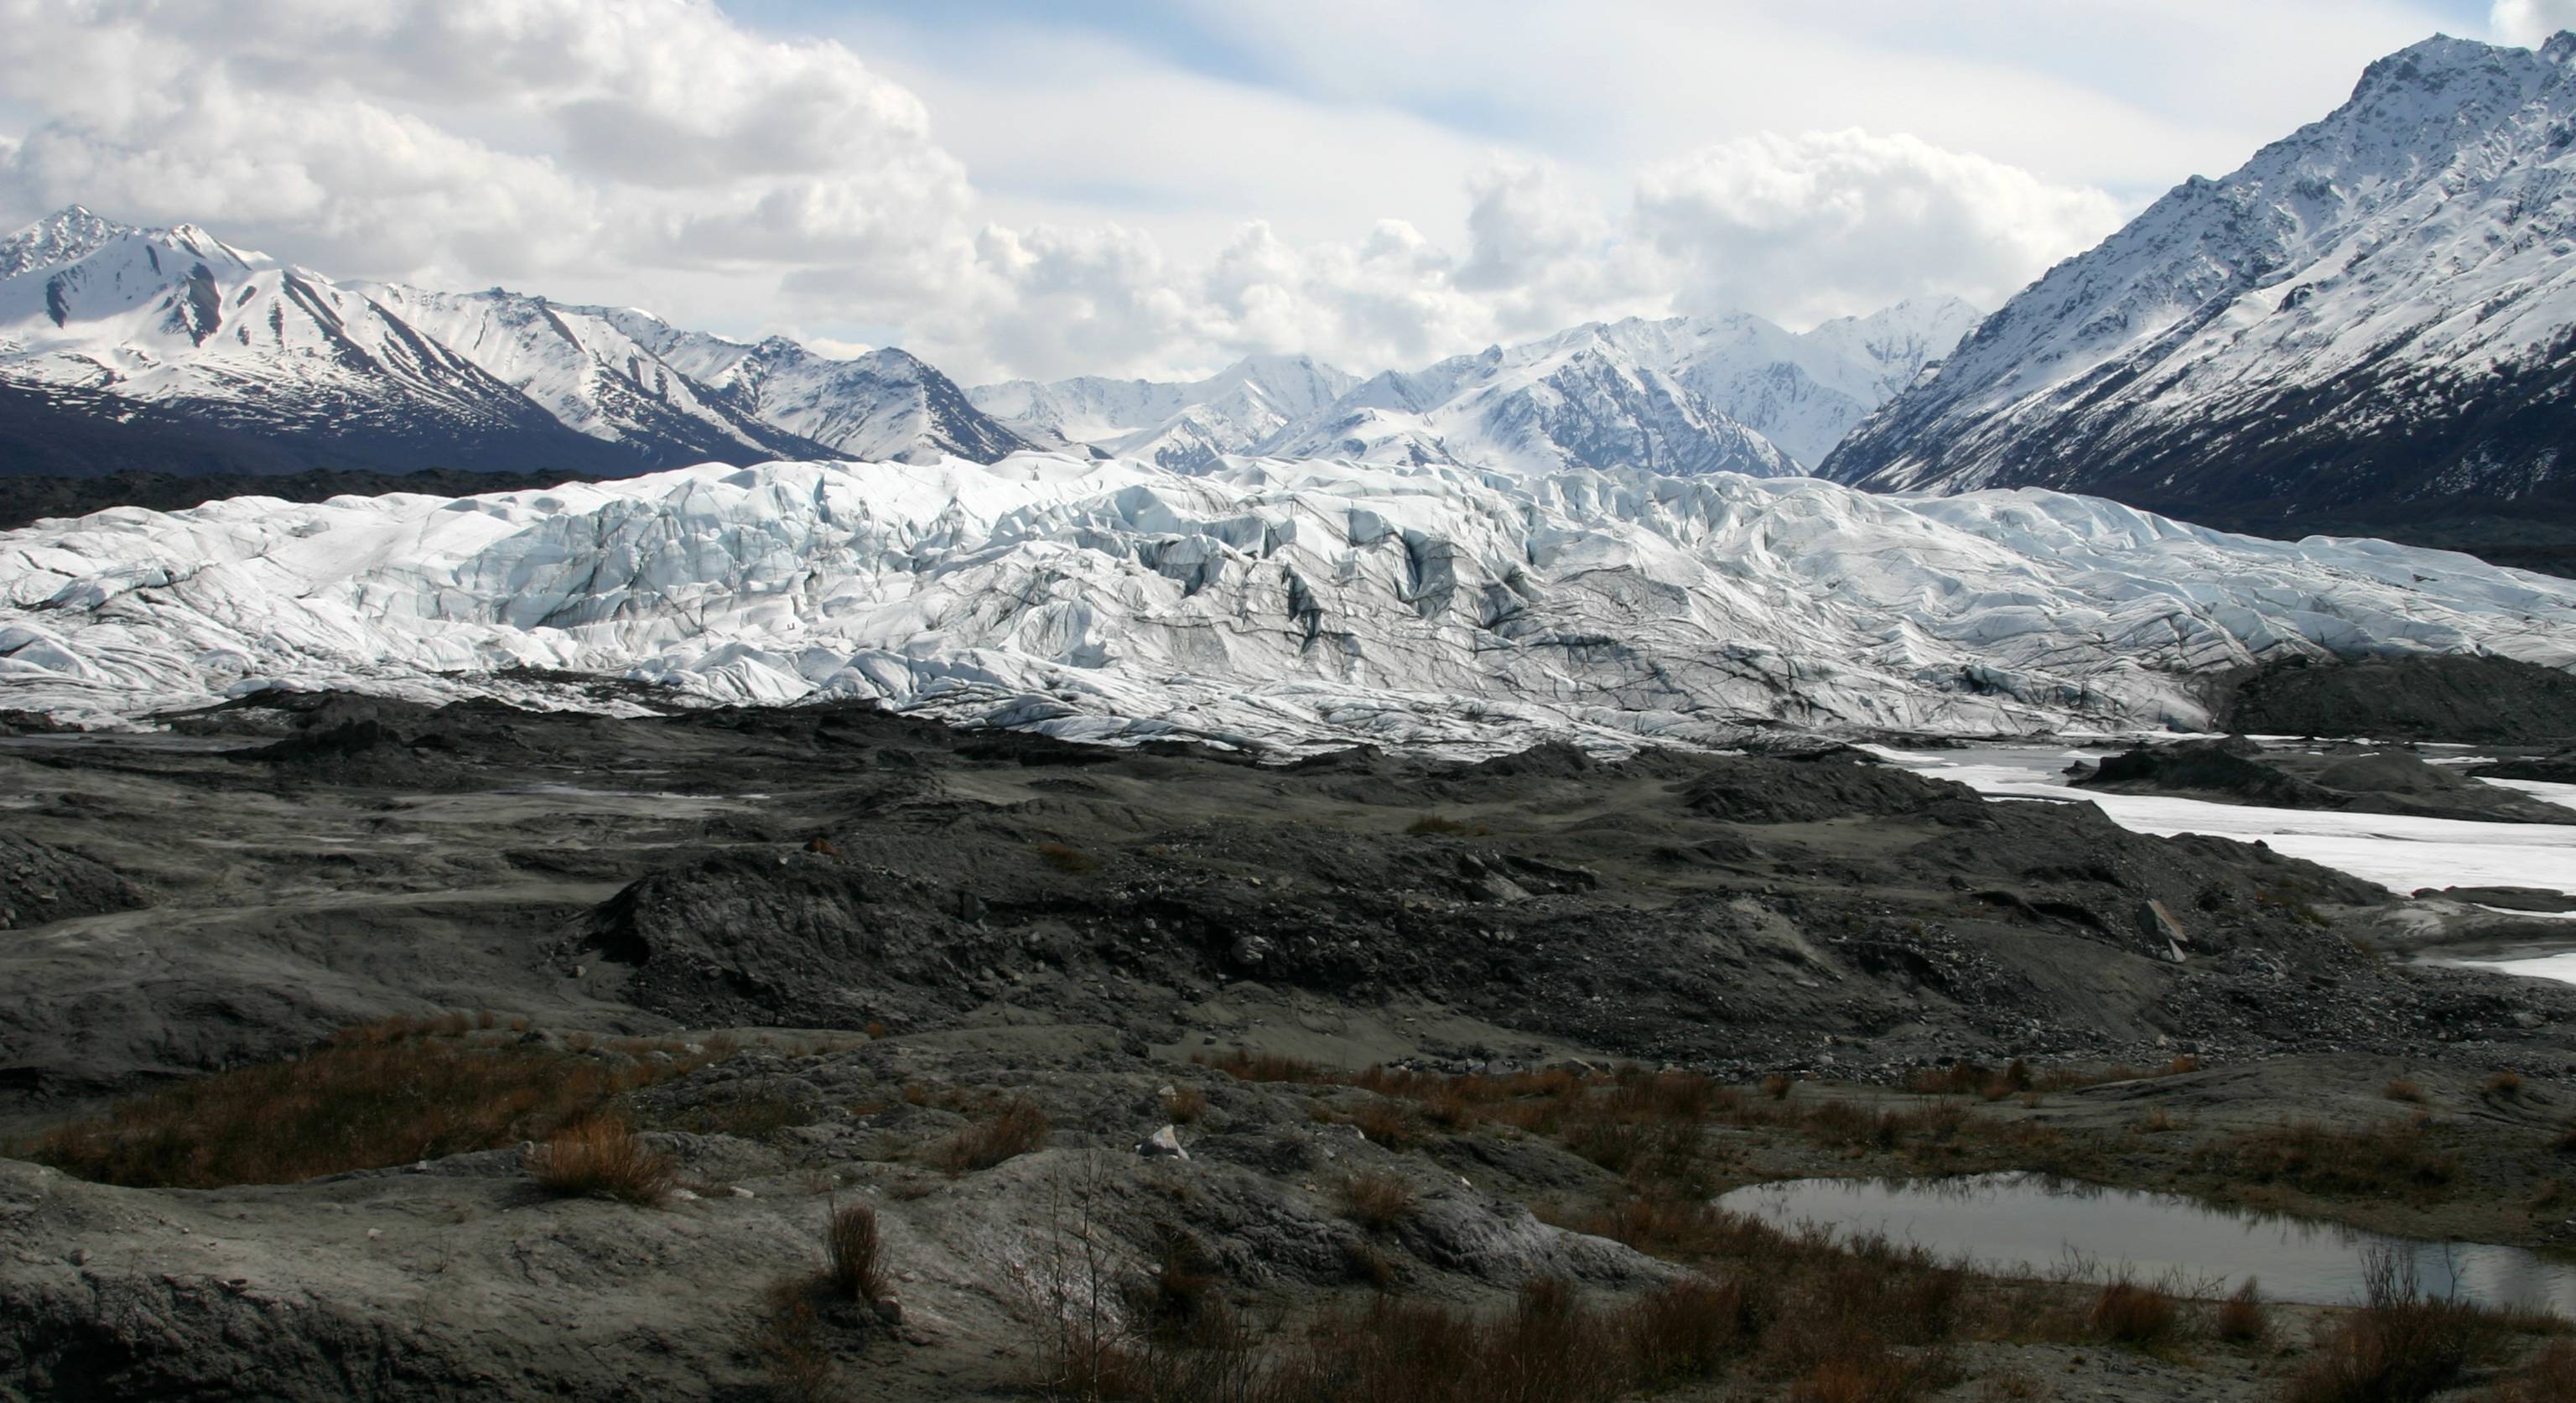 Matanuska Glacier from parking lot